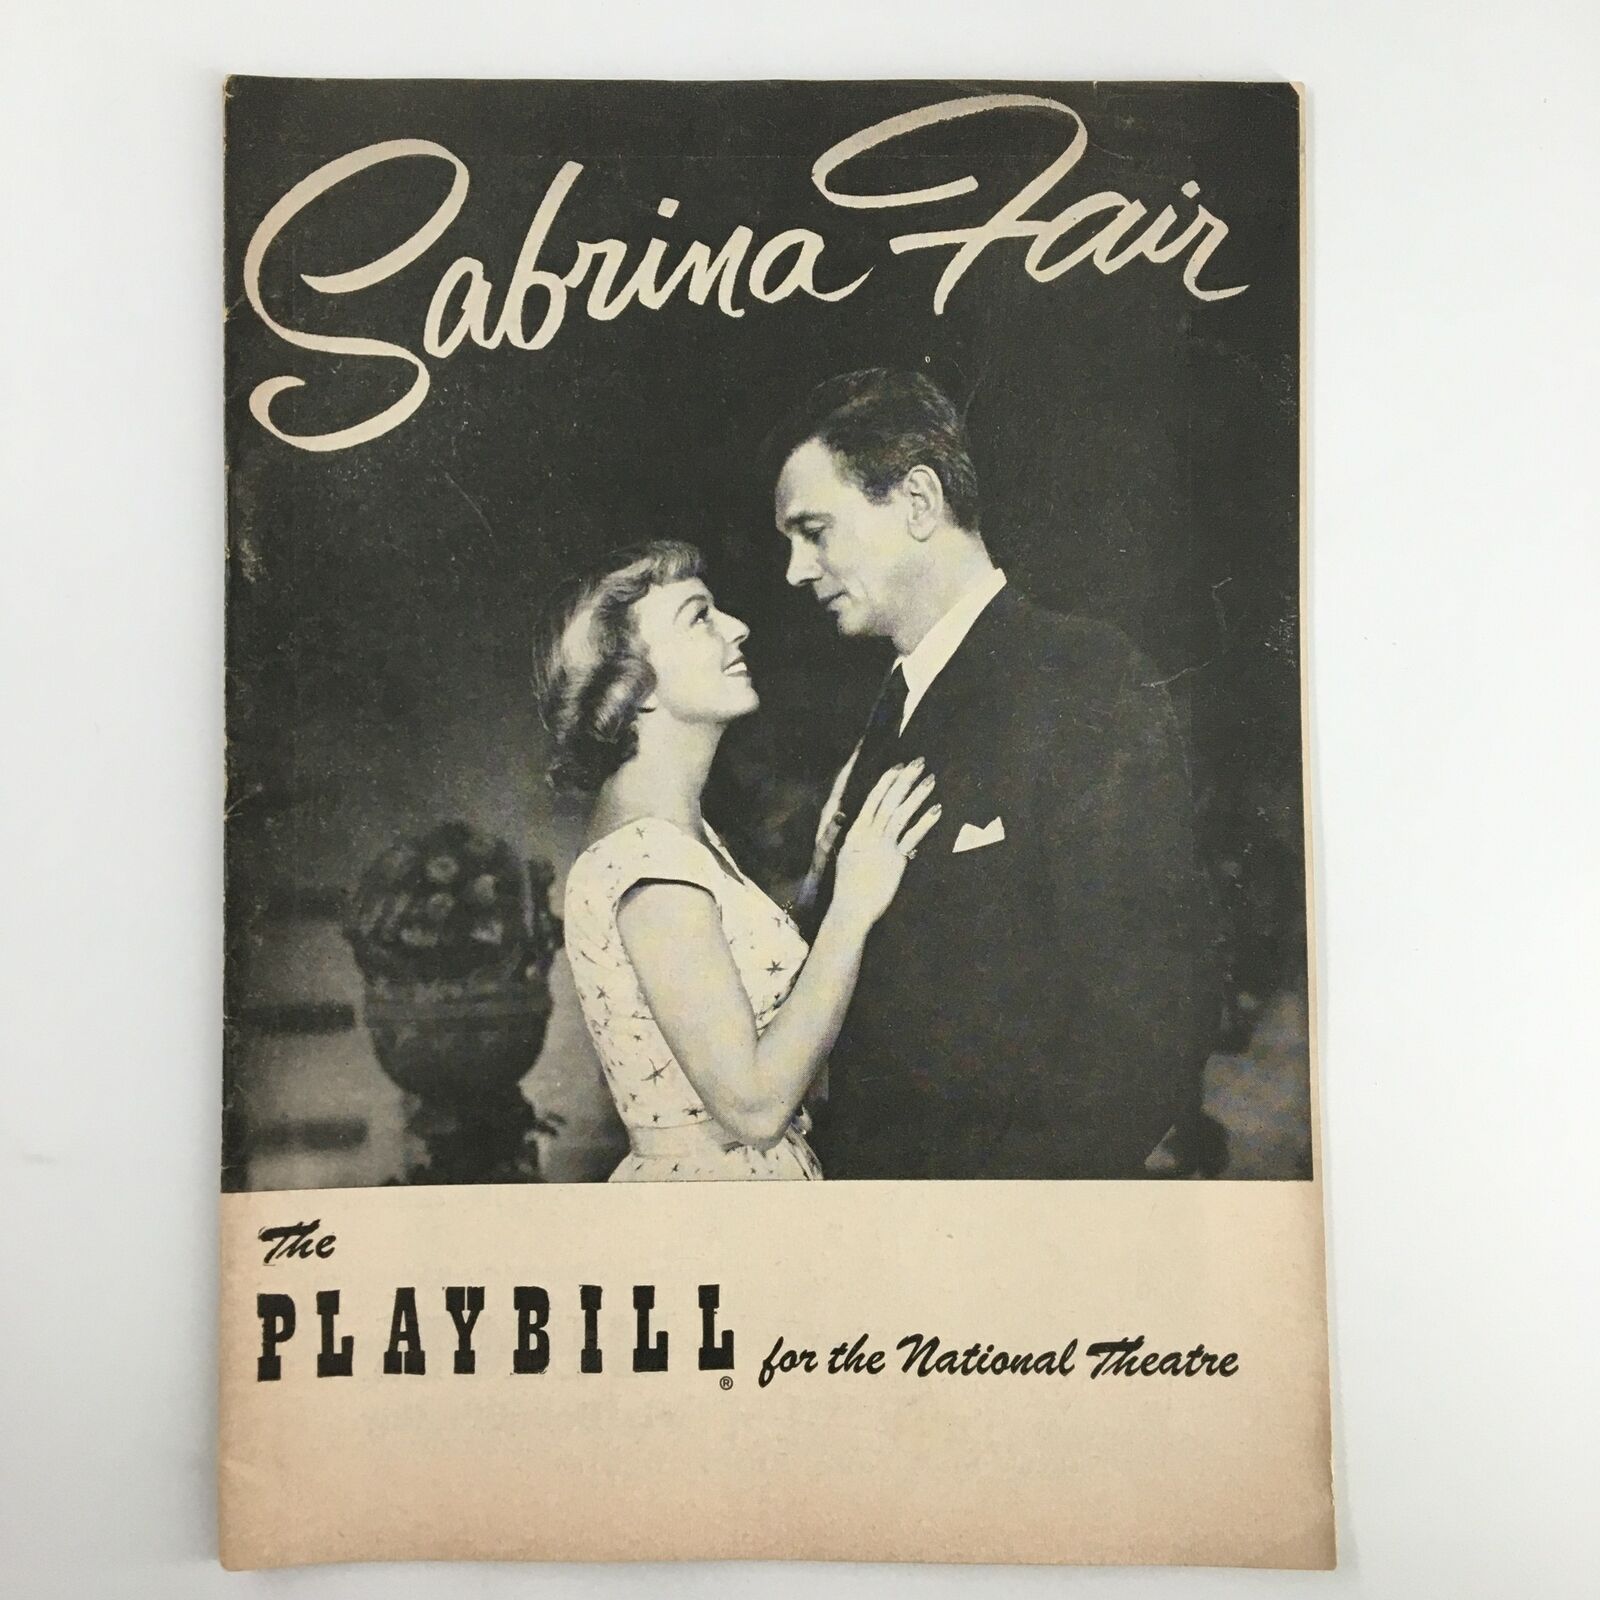 1954 Playbill National Theatre Margaret Sullivan in Sabrina Fair